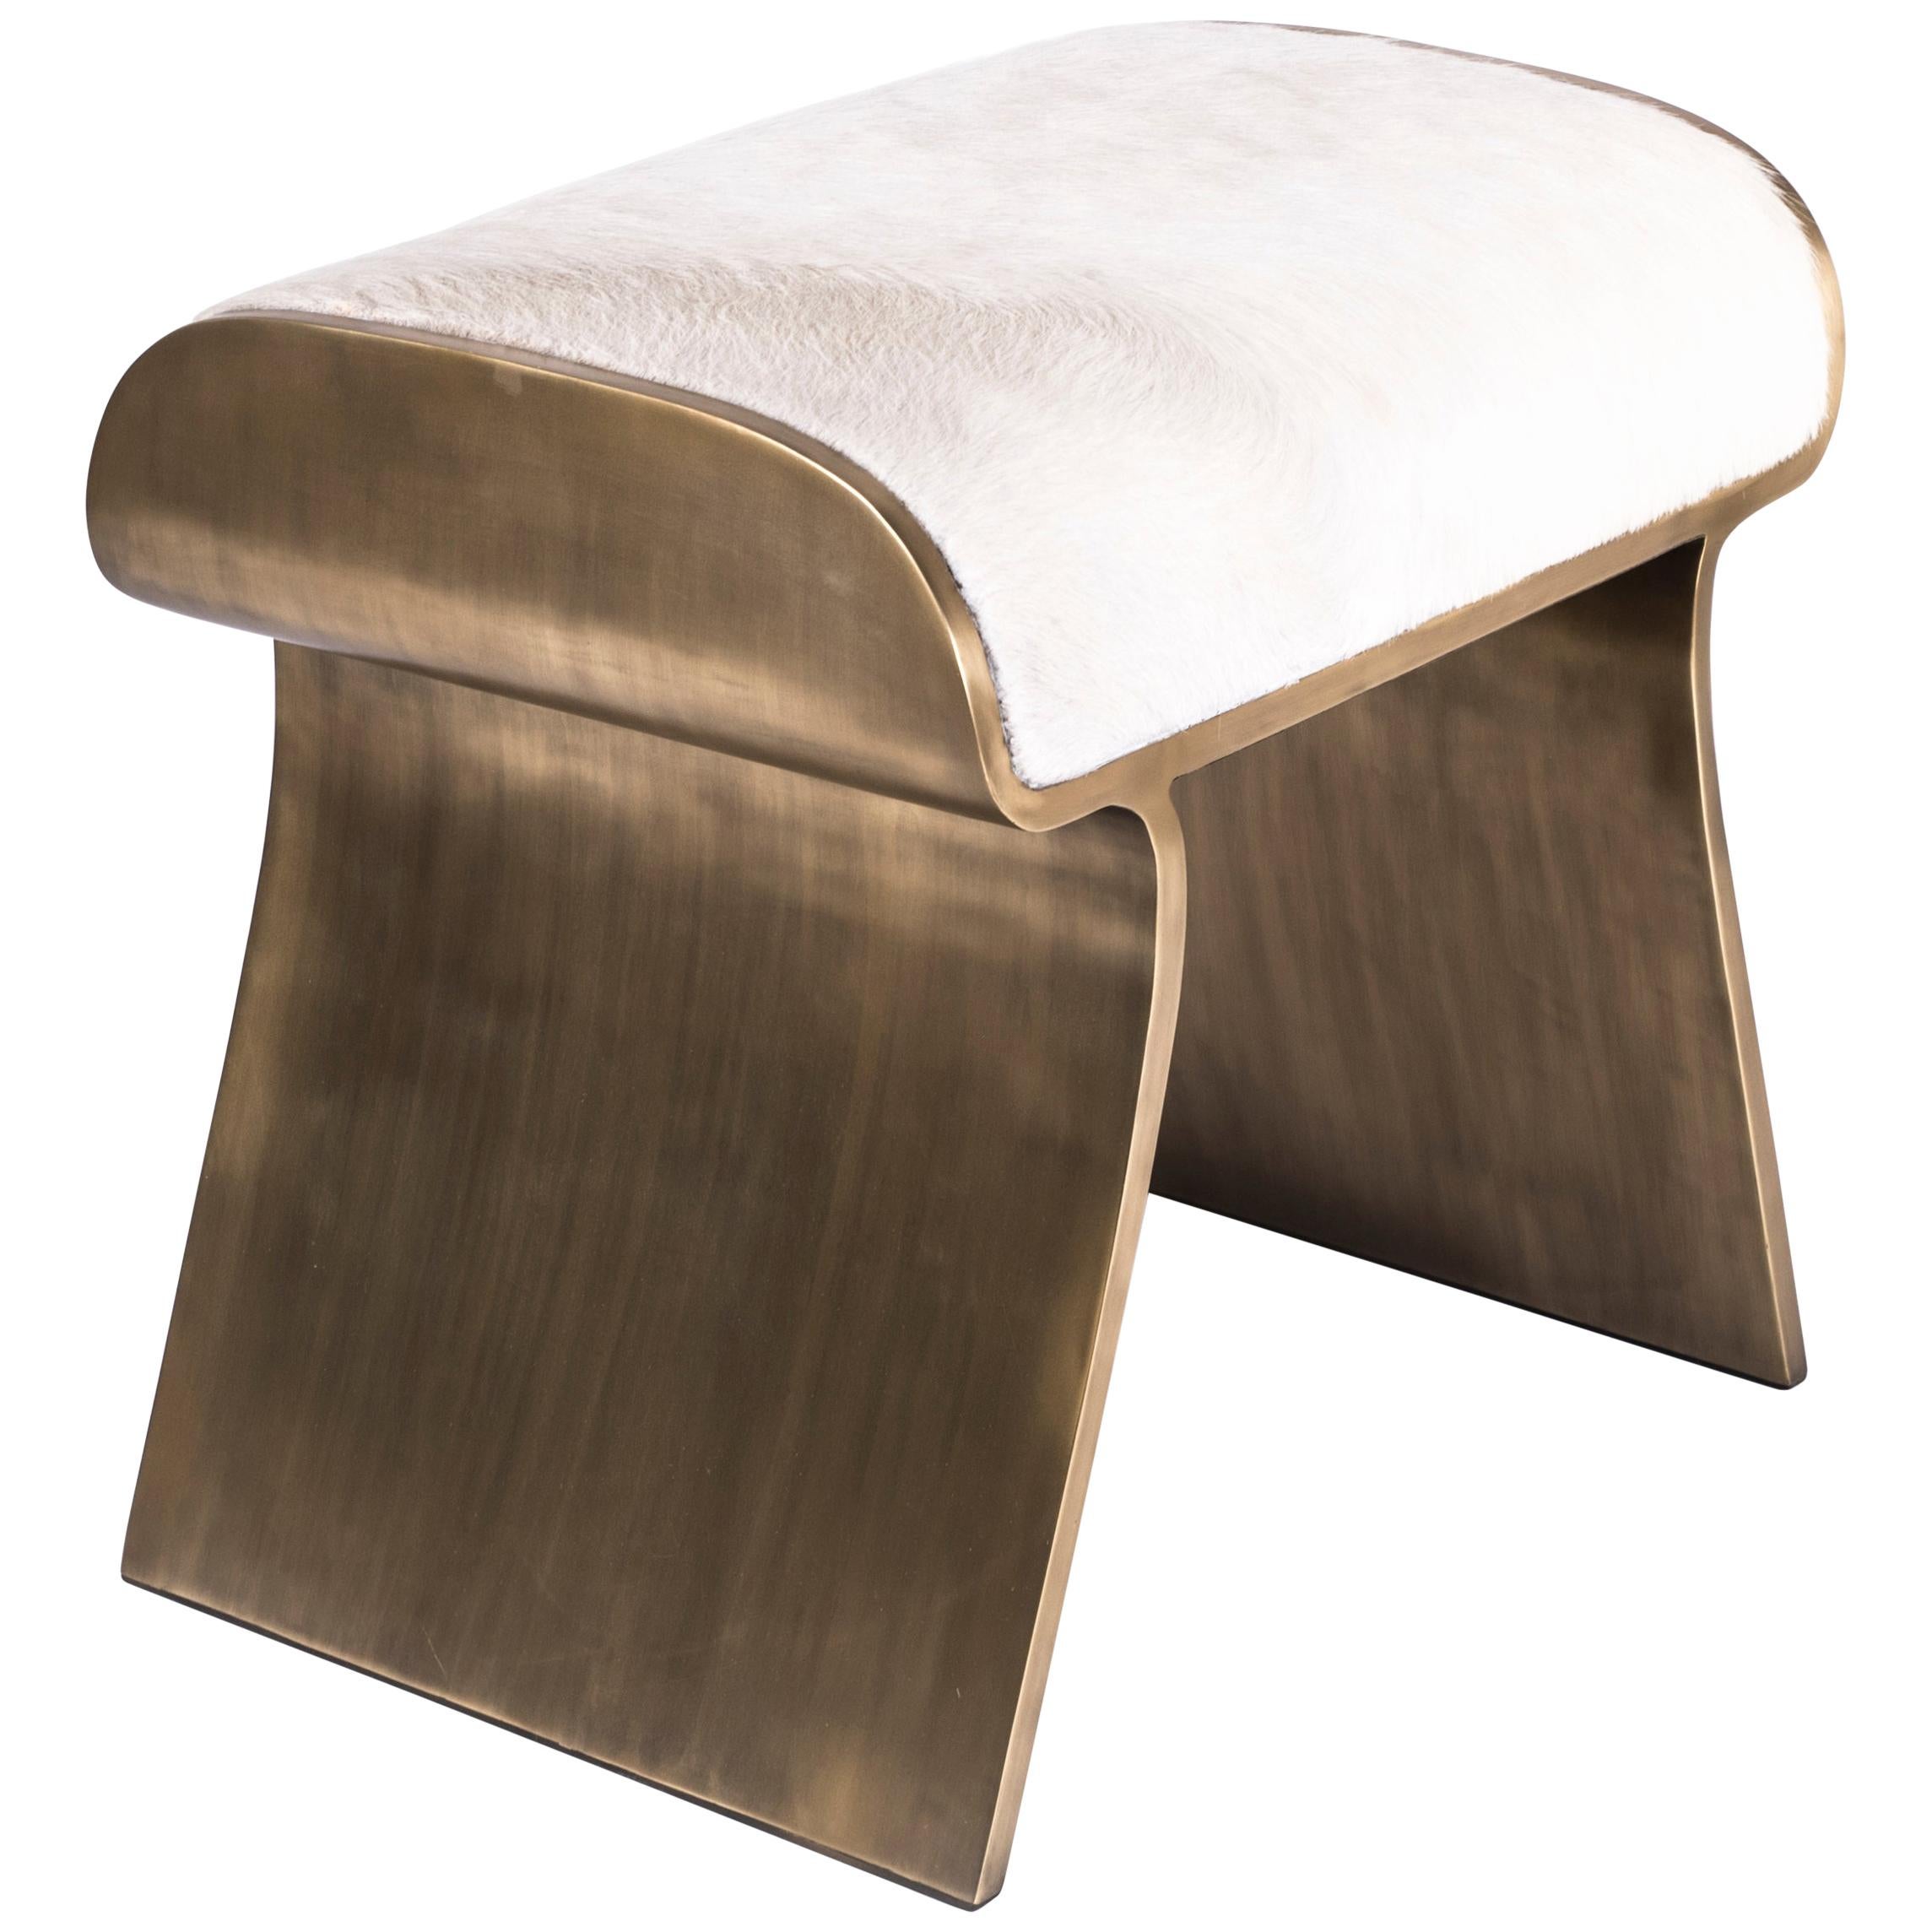 Dandy Stool Upholstered in Cream Fur & Bronze-Patina Brass Details by Kifu Paris